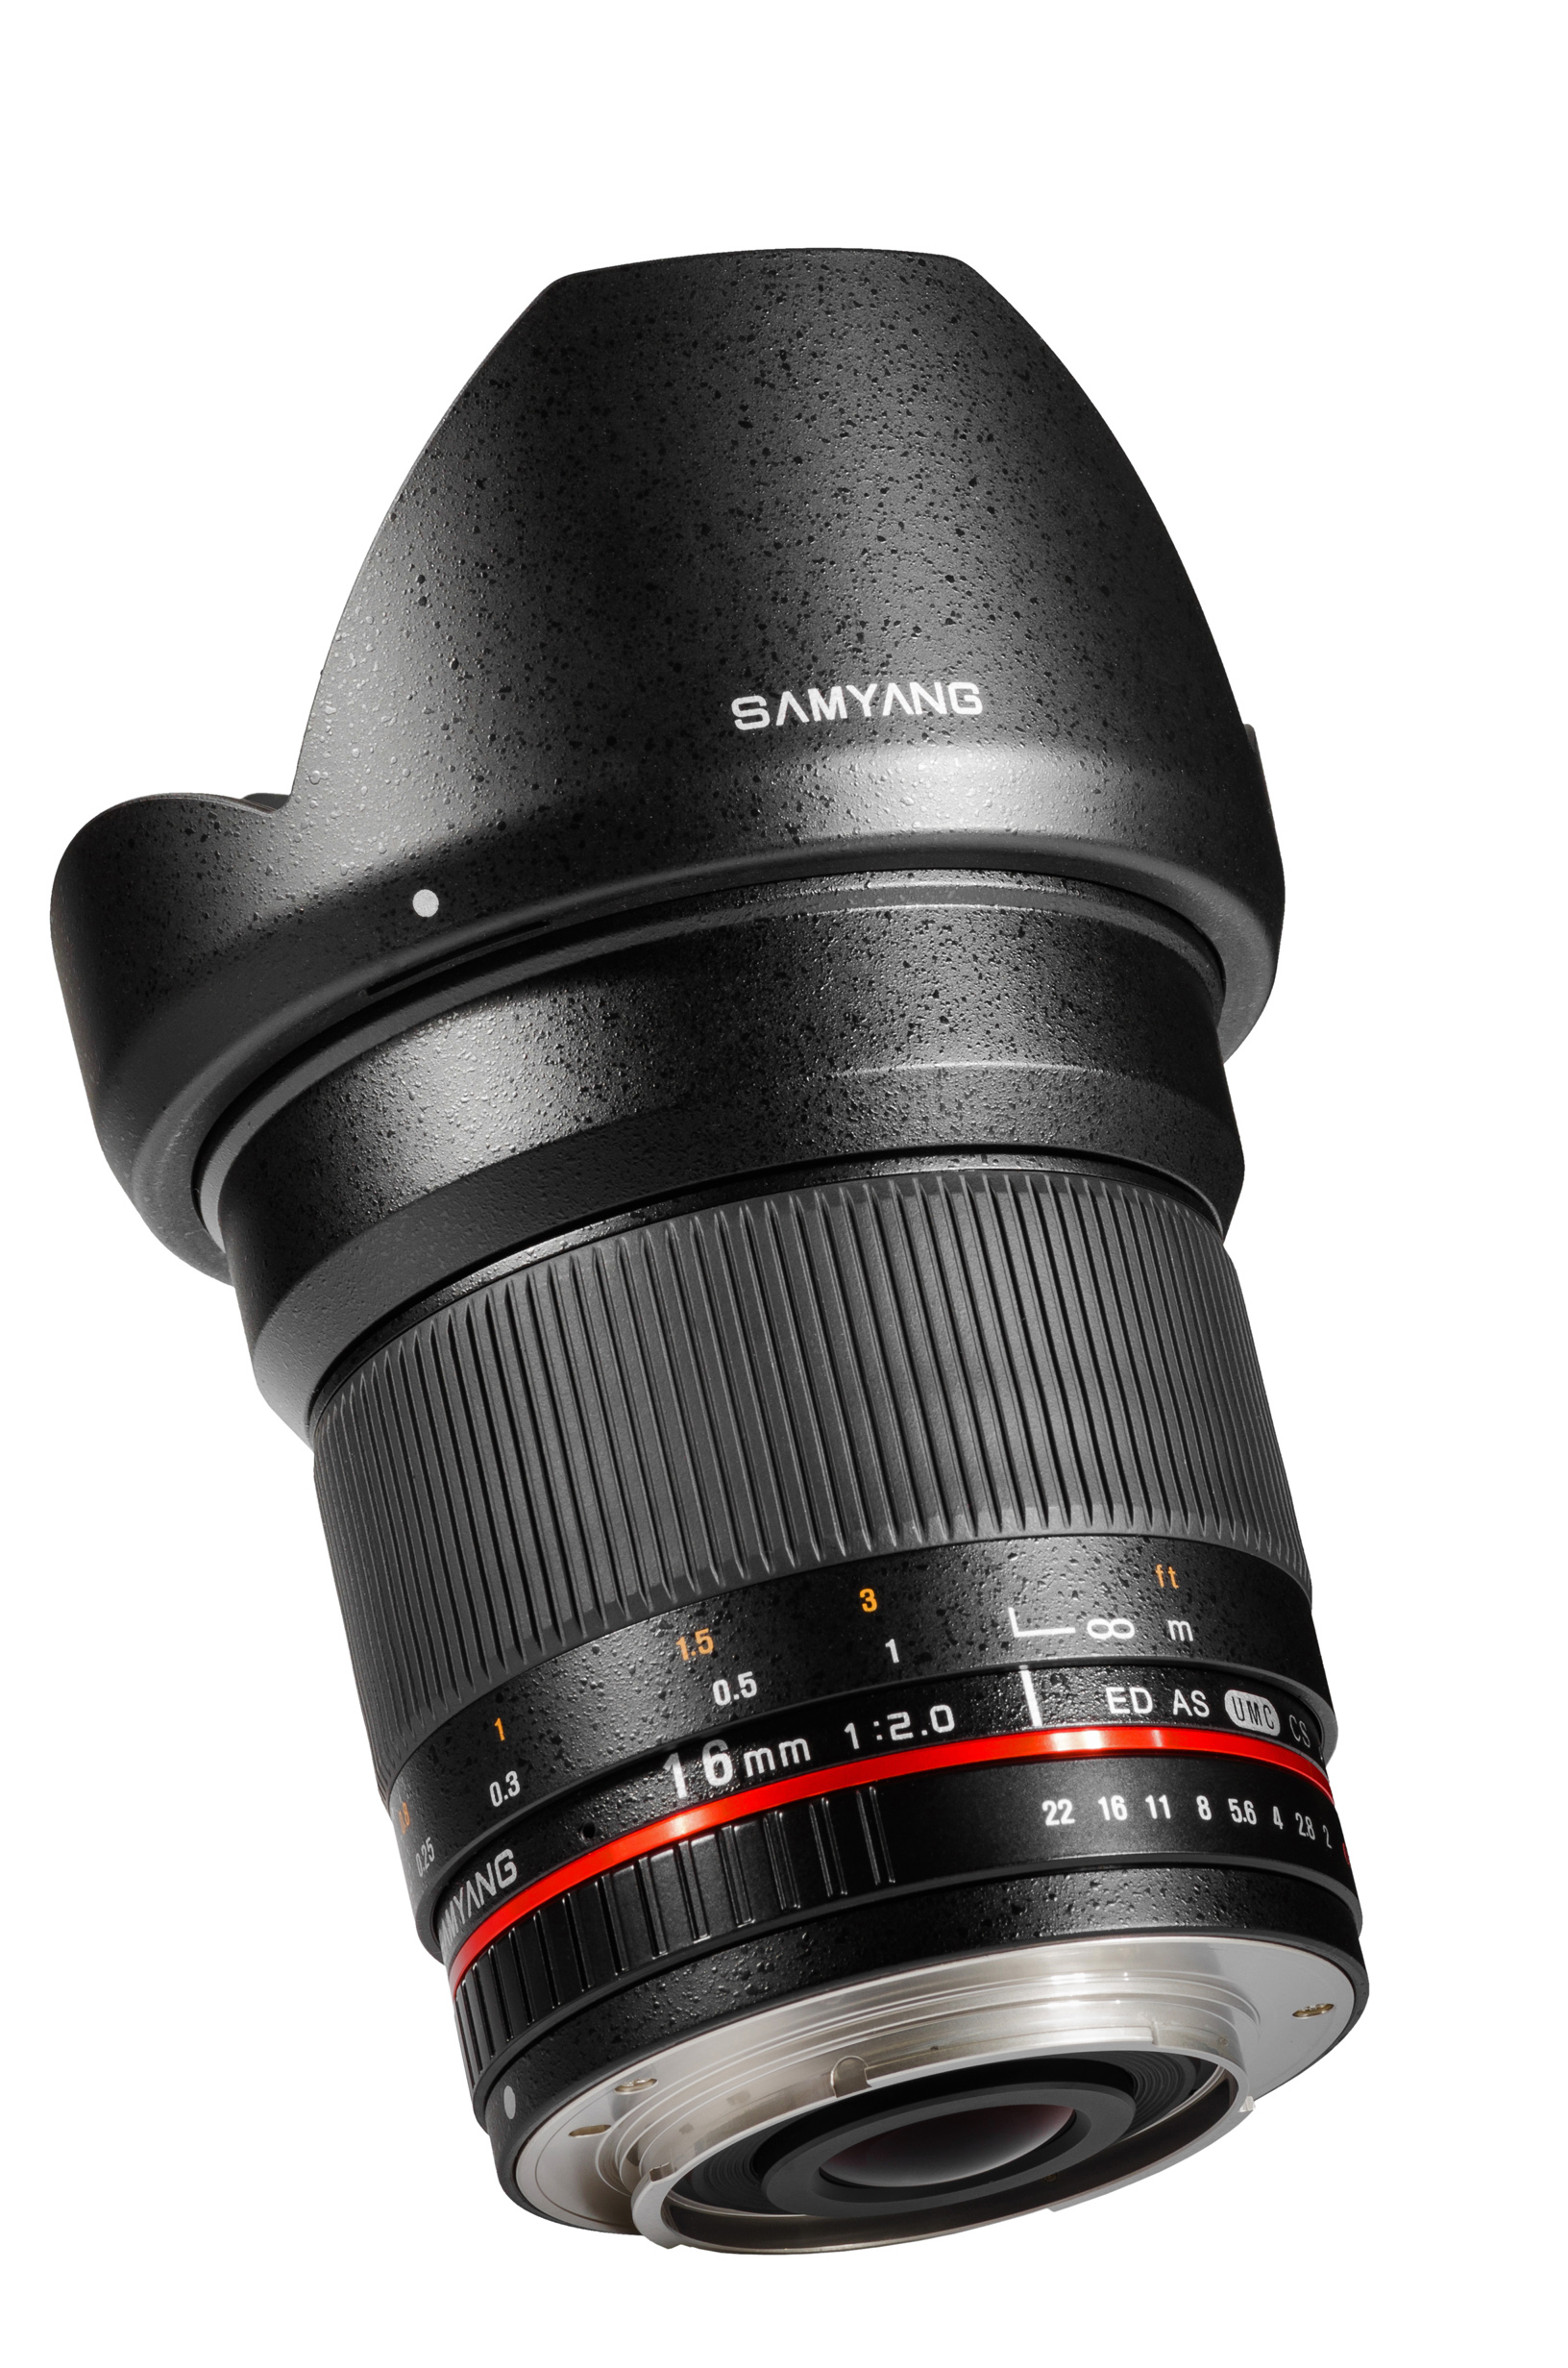 Samyang 16mm f/2.0 Canon EF